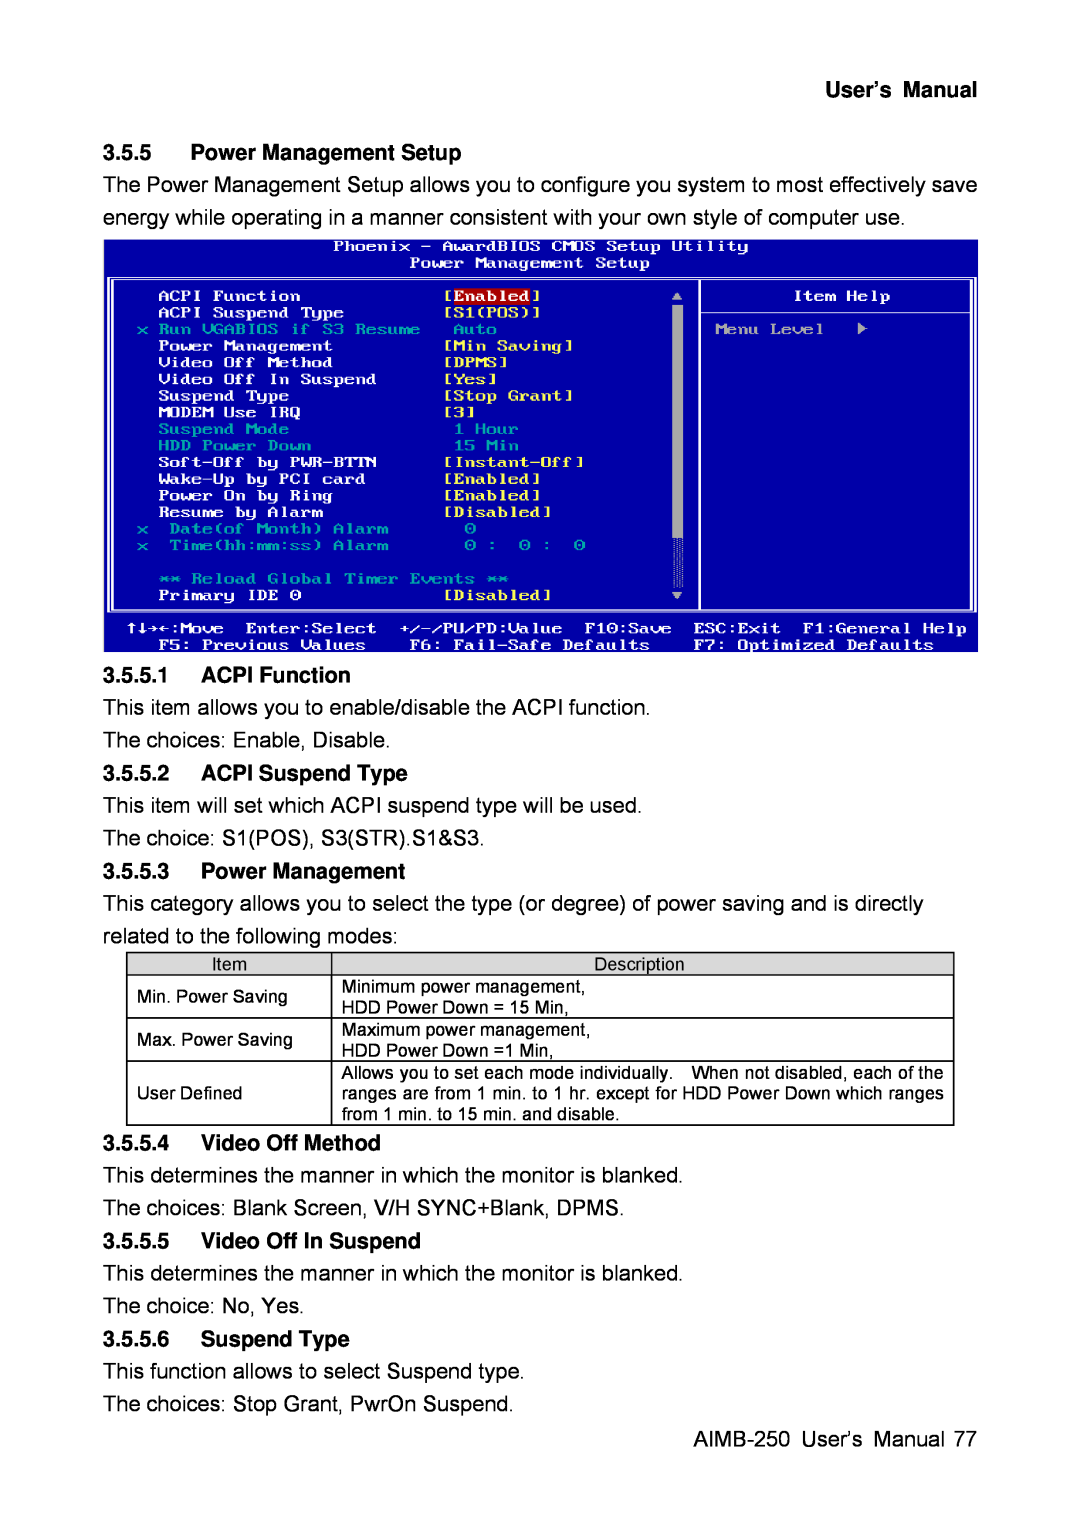 Advantech AIMB-250 User’s Manual 3.5.5 Power Management Setup, ACPI Function, ACPI Suspend Type, Video Off Method 